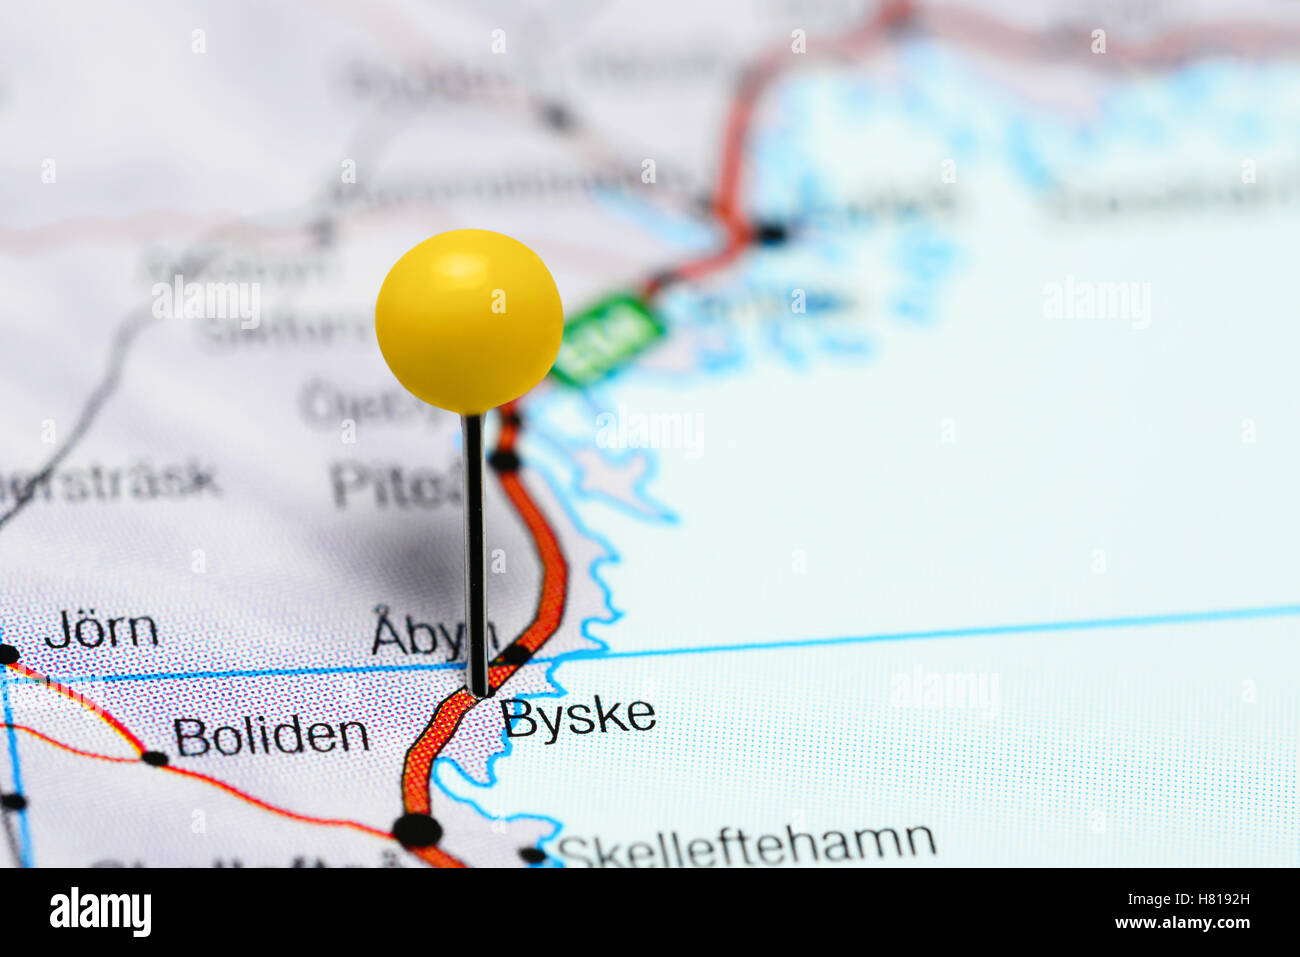 Byske pinned on a map of Sweden Stock Photo